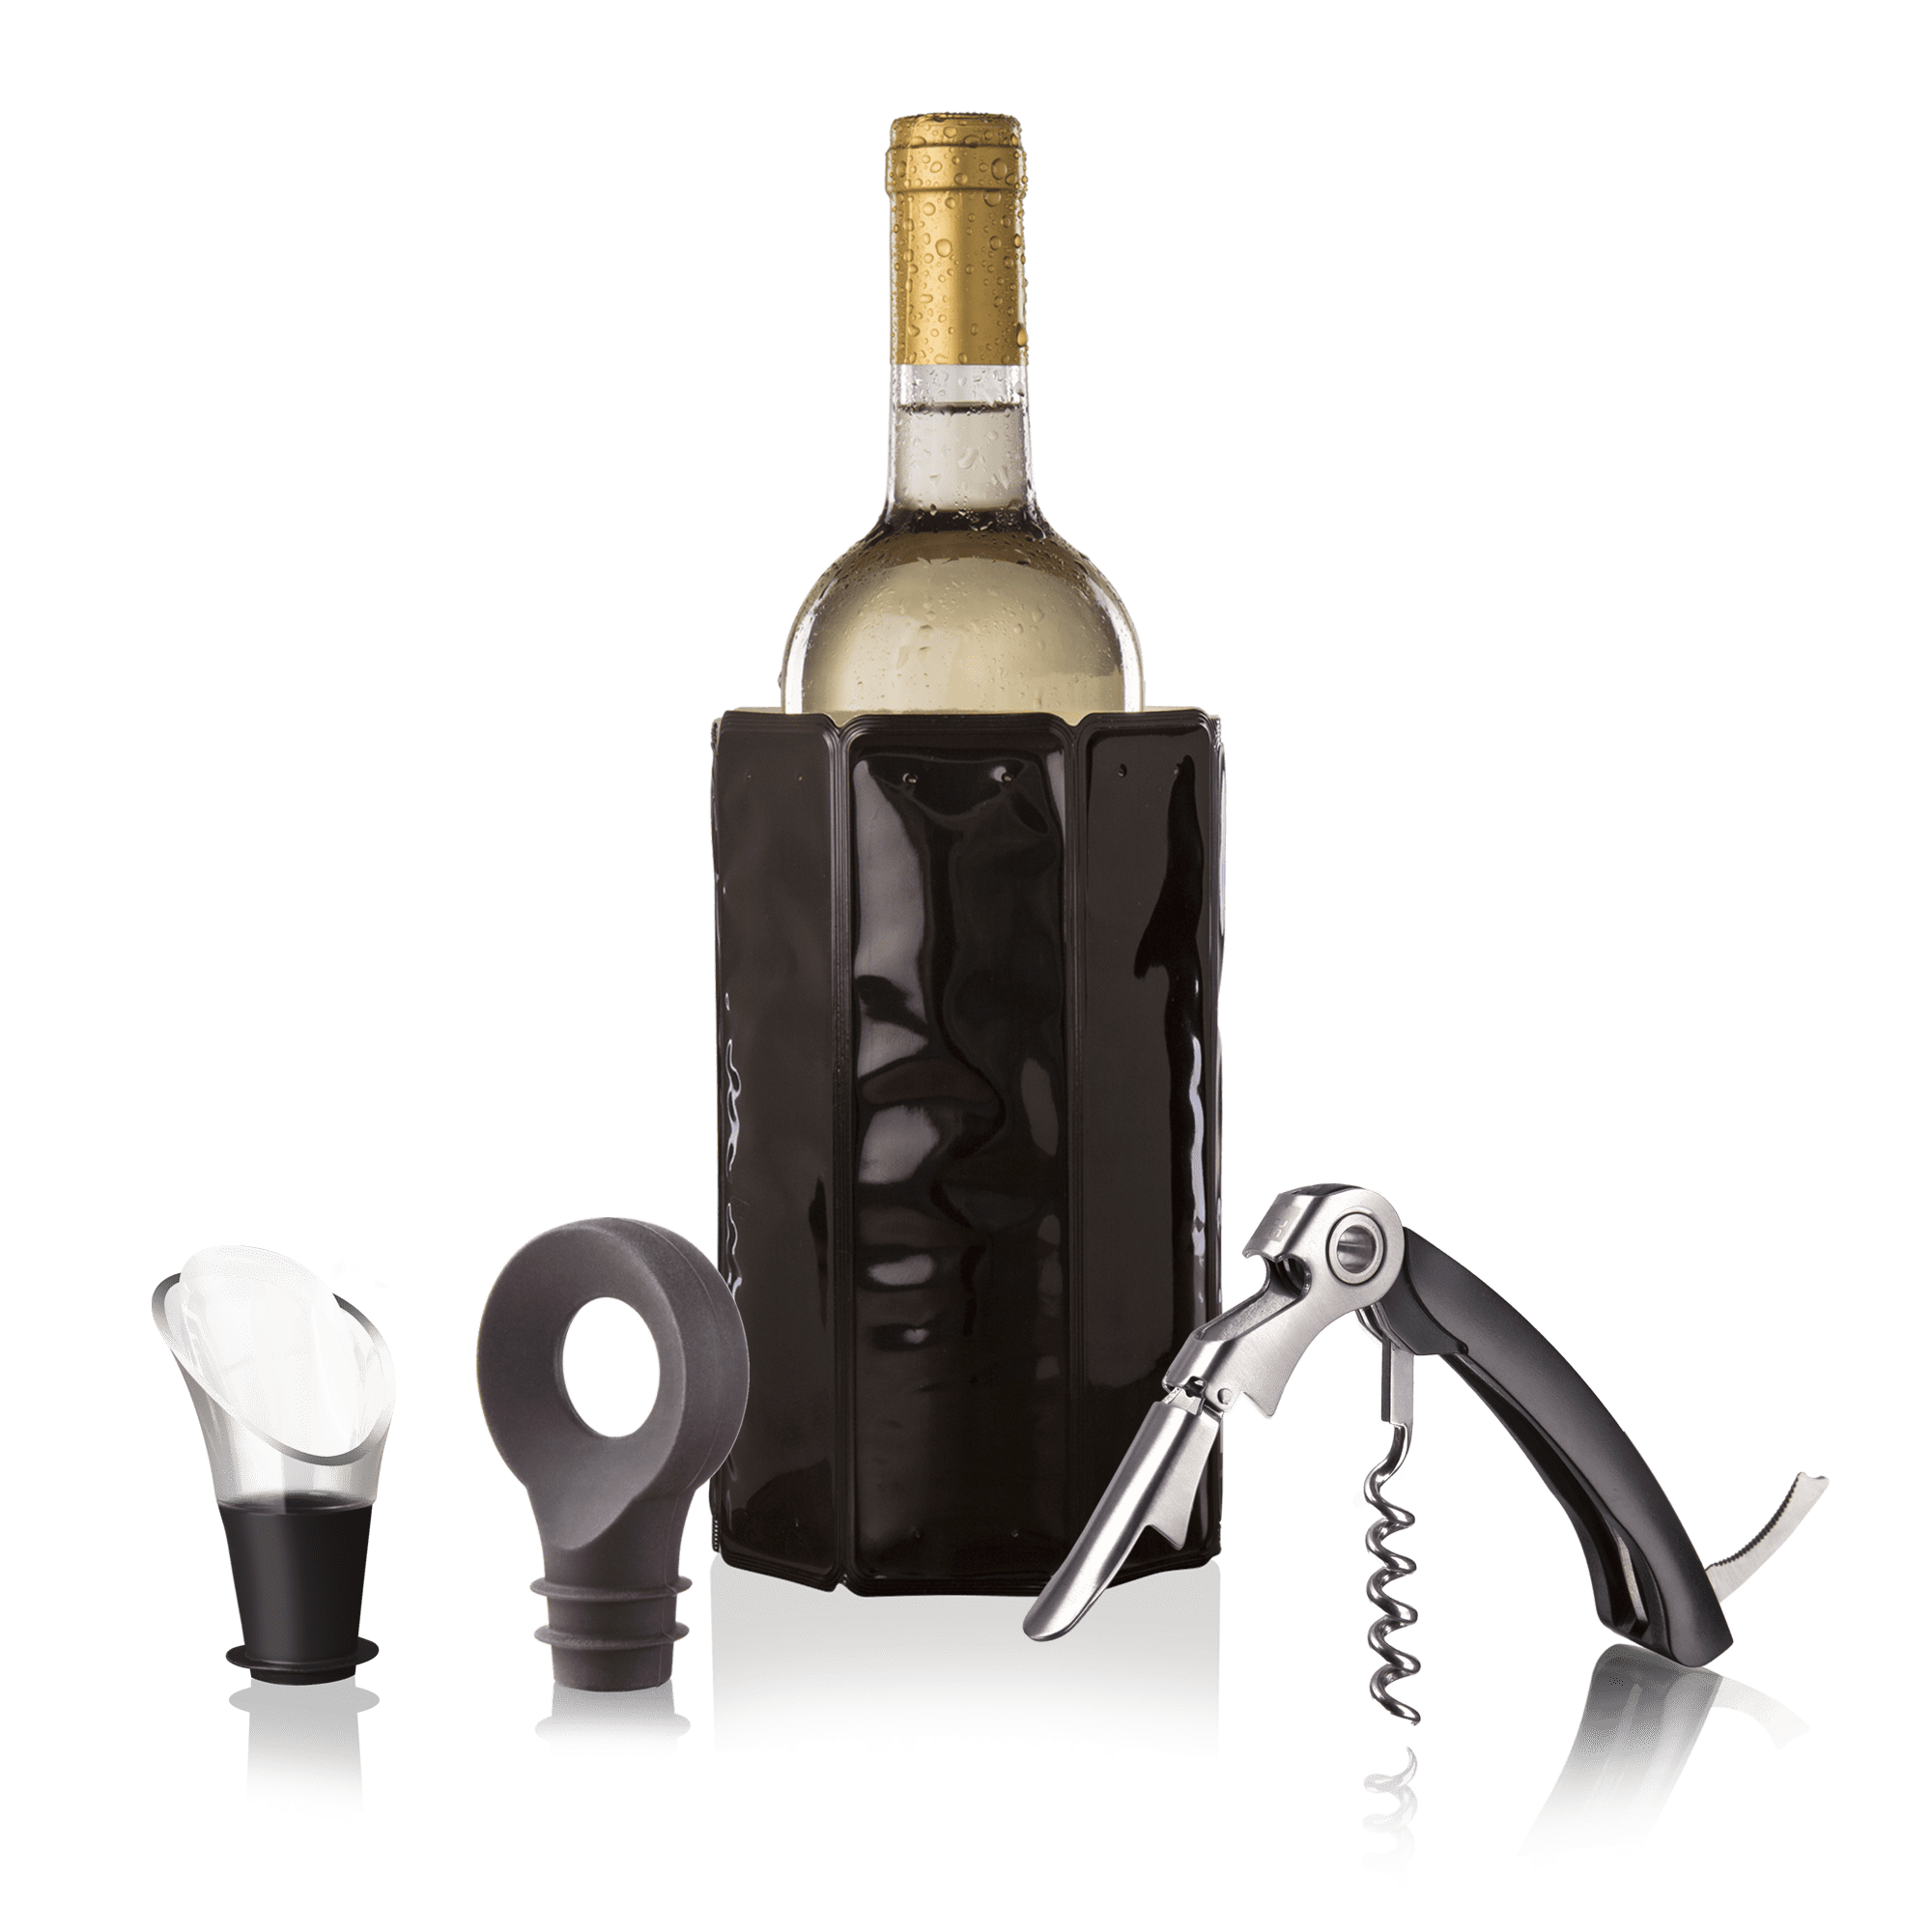 Wine Essentials Set Vacu Vin